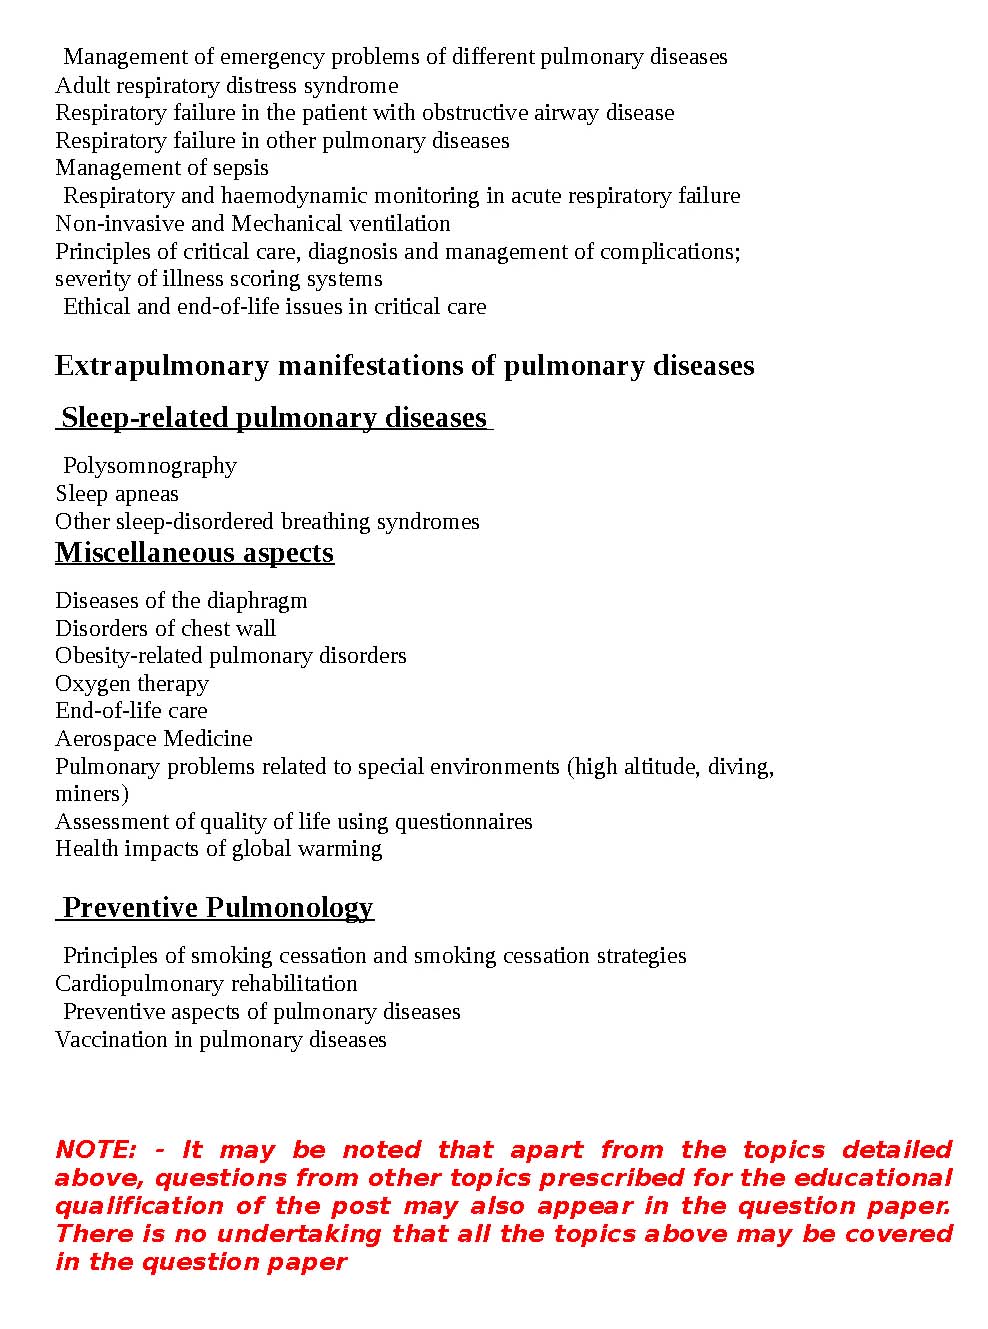 KPSC Syllabus Assistant Professor In Pulmonary Jan 2019 - Notification Image 5